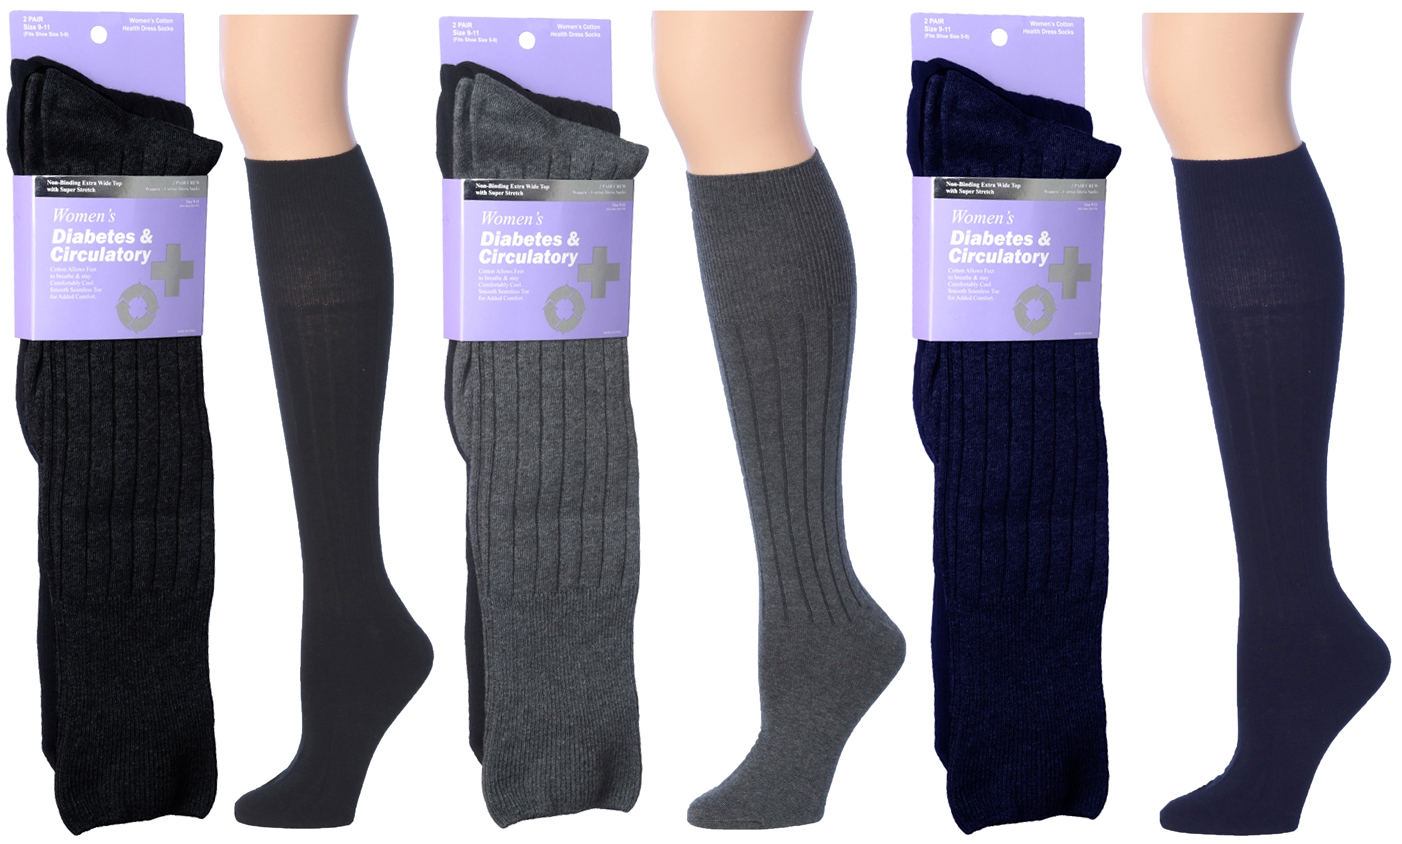 Women's Diabetic Knee High Socks - Assorted Colors - Size 9-11 - 2-Pair Packs